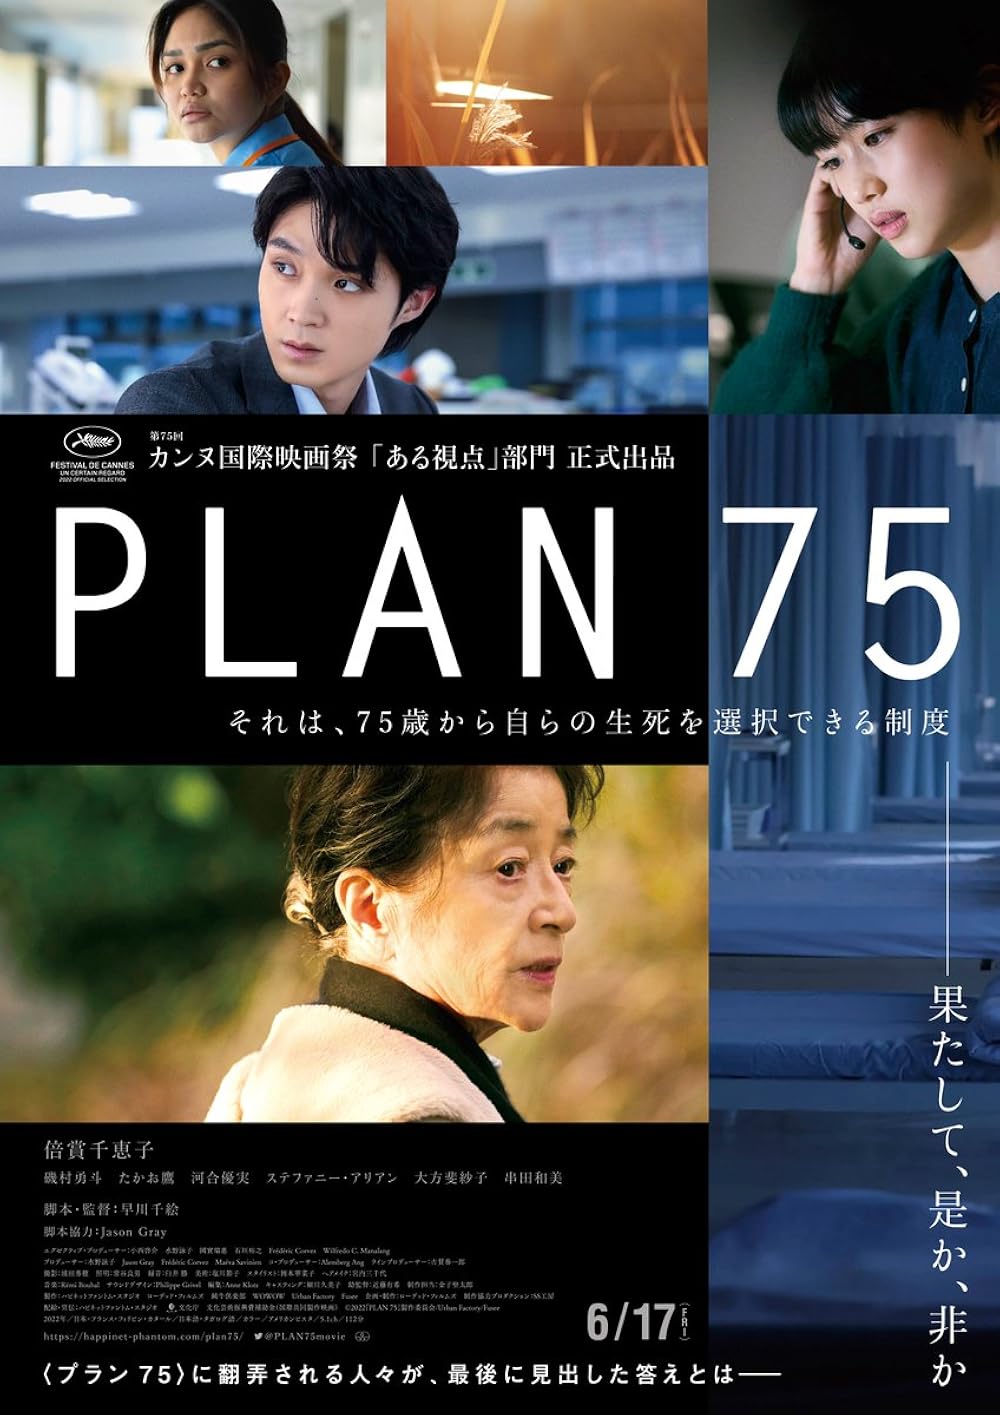 Plan 75: Hayakawa Chie’s Dark Visual Articulation of the Crisis of Japan’s Aging Society